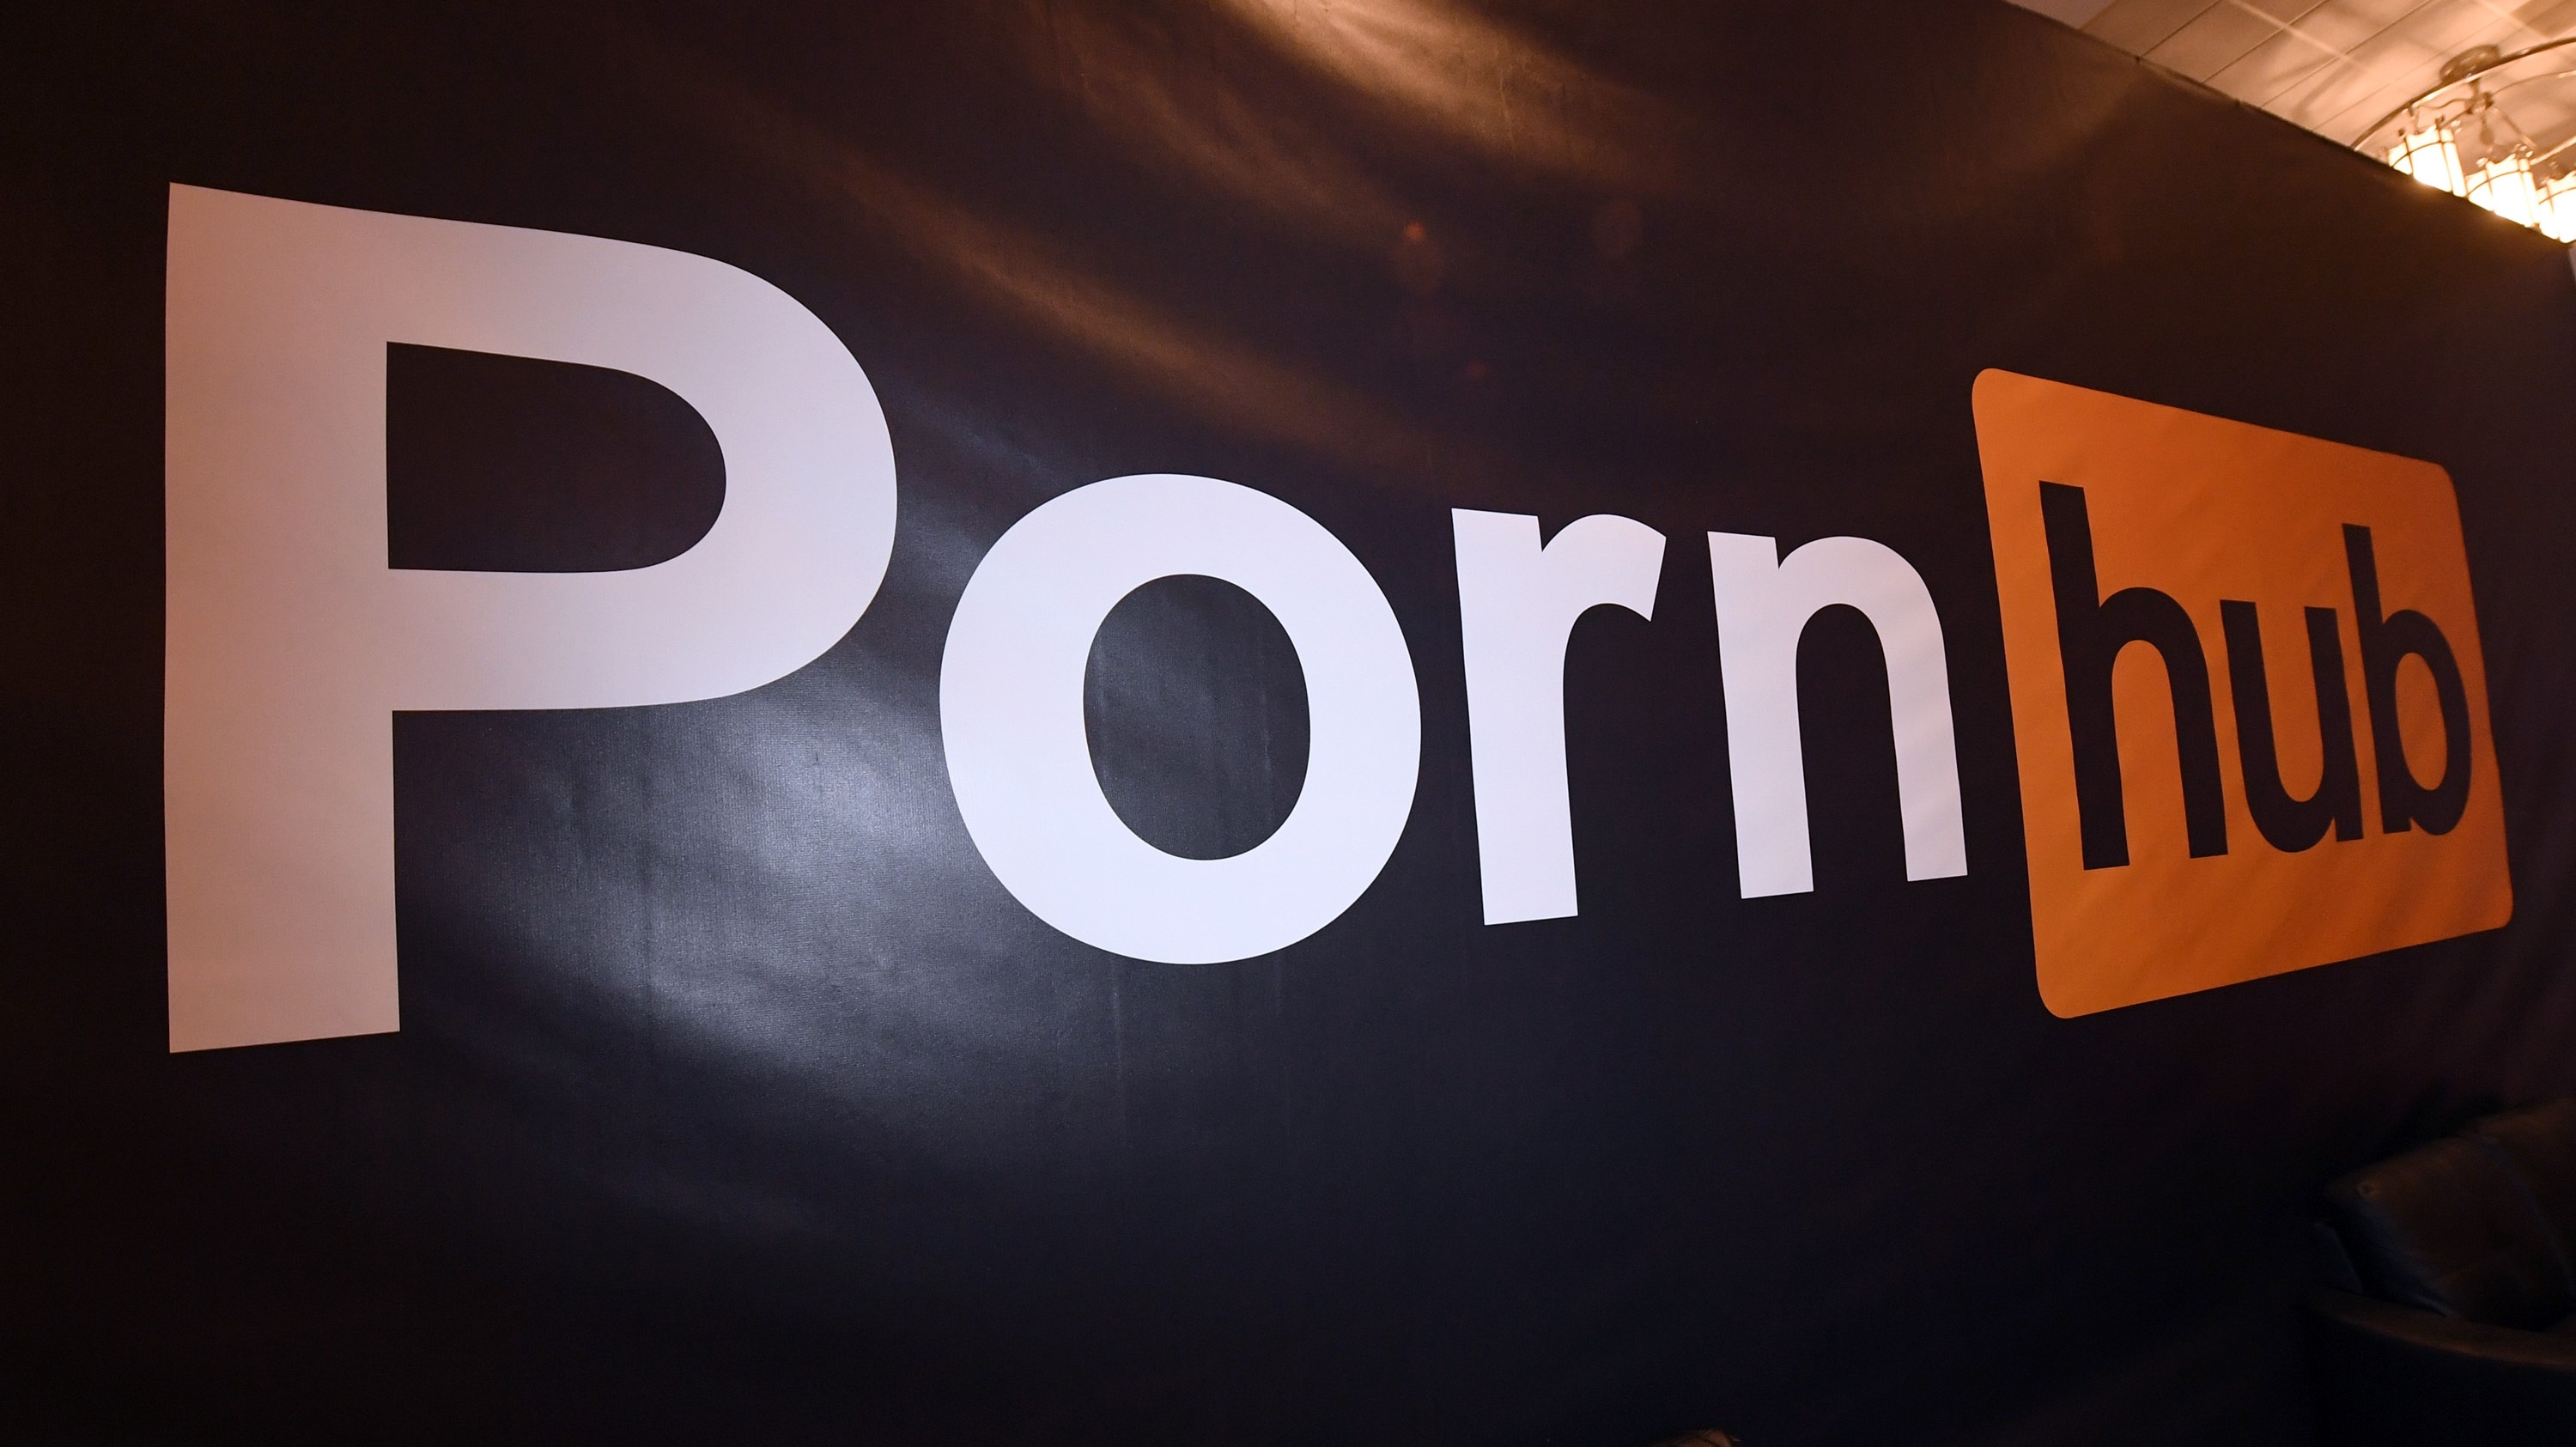 charmaine de joya recommends How To Delete My Pornhub Account